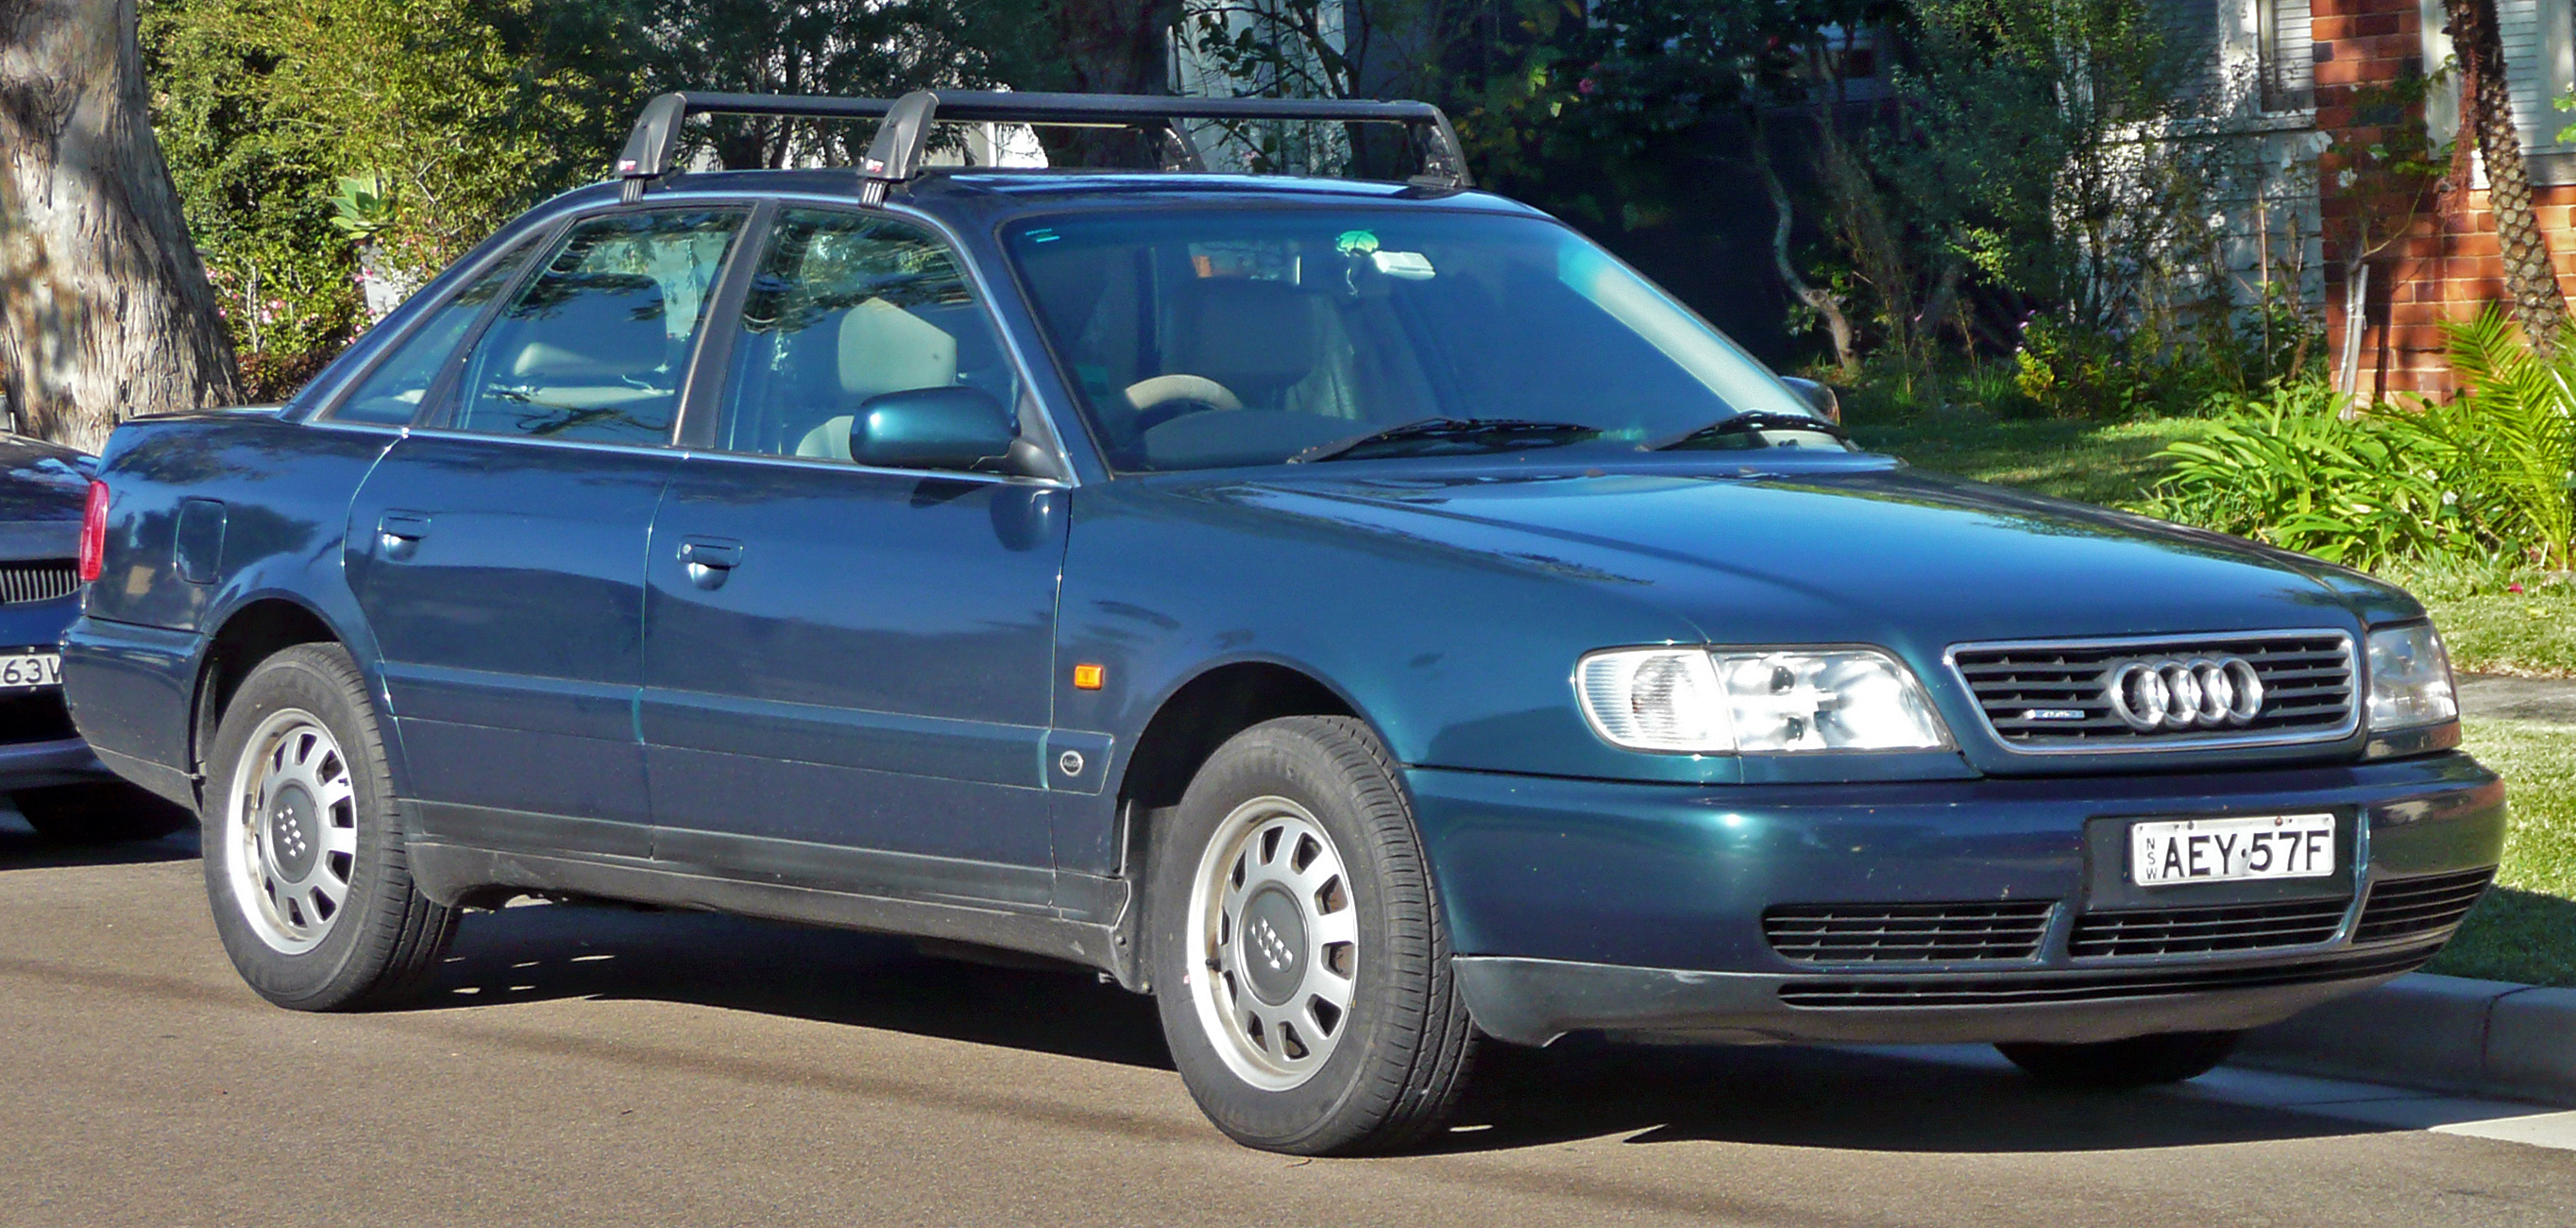 File:1994-1997 Audi A6 (4A) 2.6 quattro sedan 01.jpg - Wikimedia Commons